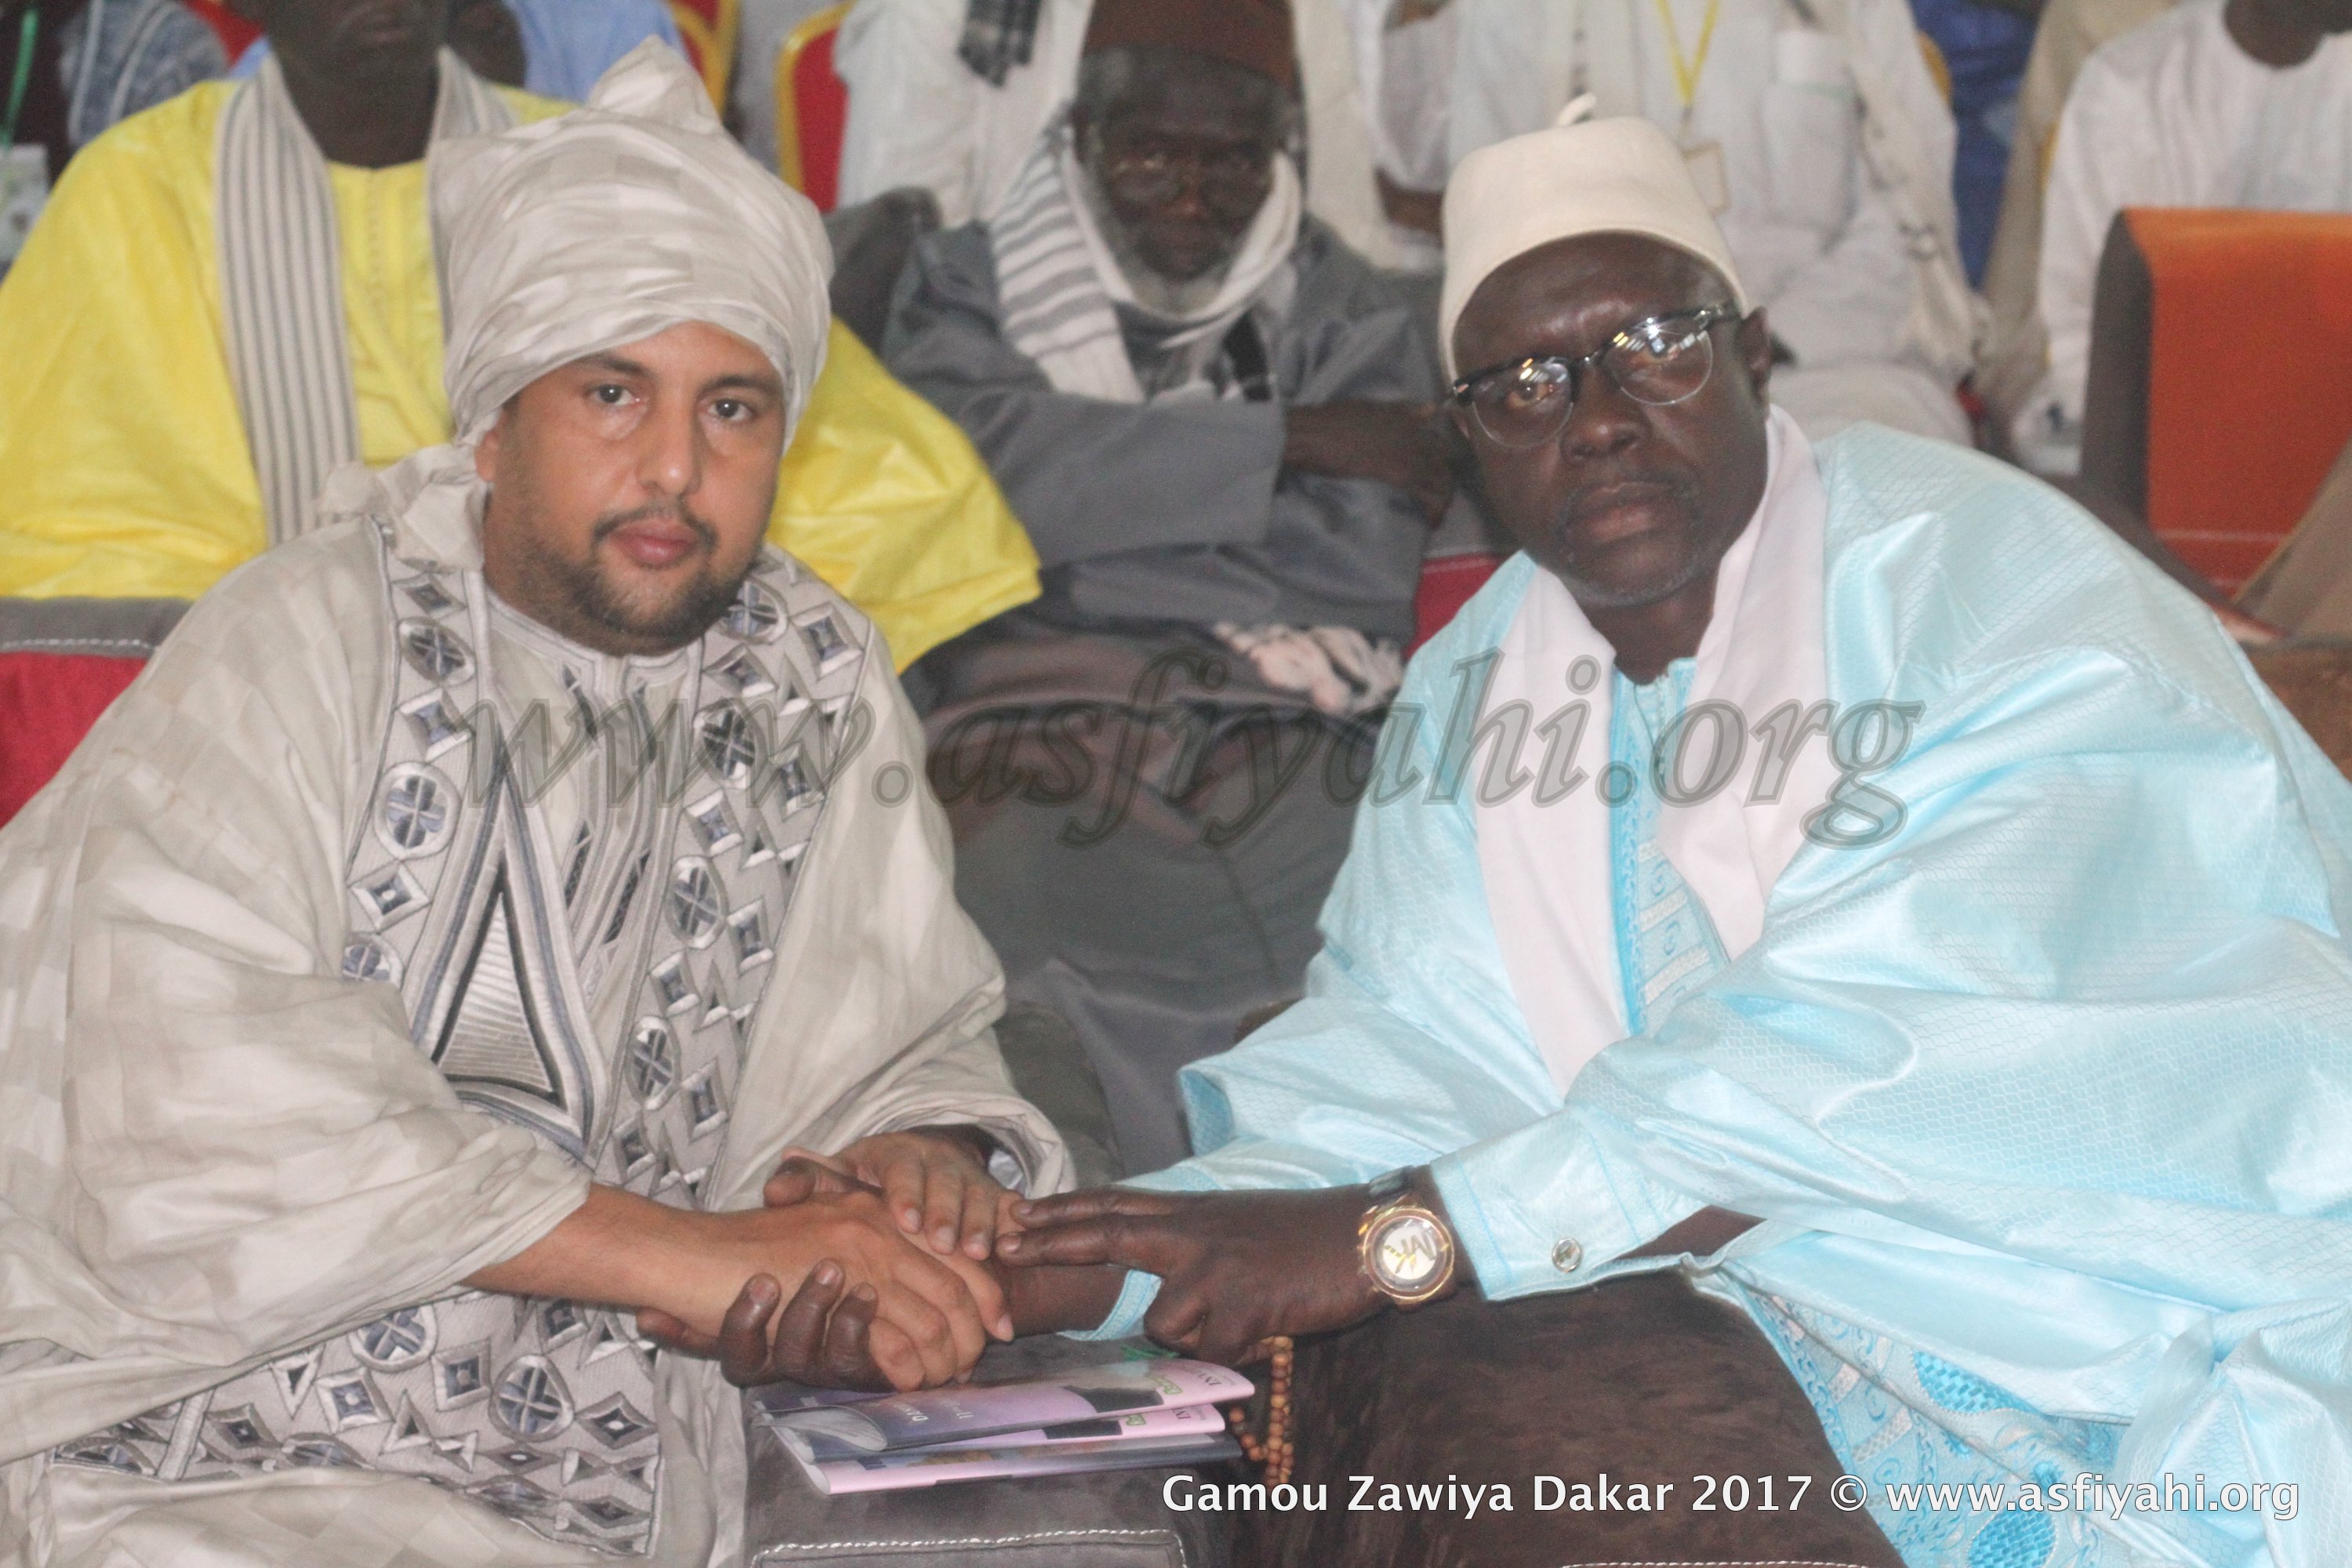 PHOTOS - 14 JANVIER 2017 - Les images du Gamou de la Zawiya El Hadj Malick Sy de Dakar, co-présidé par Serigne Mbaye Sy Mansour et Serigne Sidy Ahmed Sy Babacar 